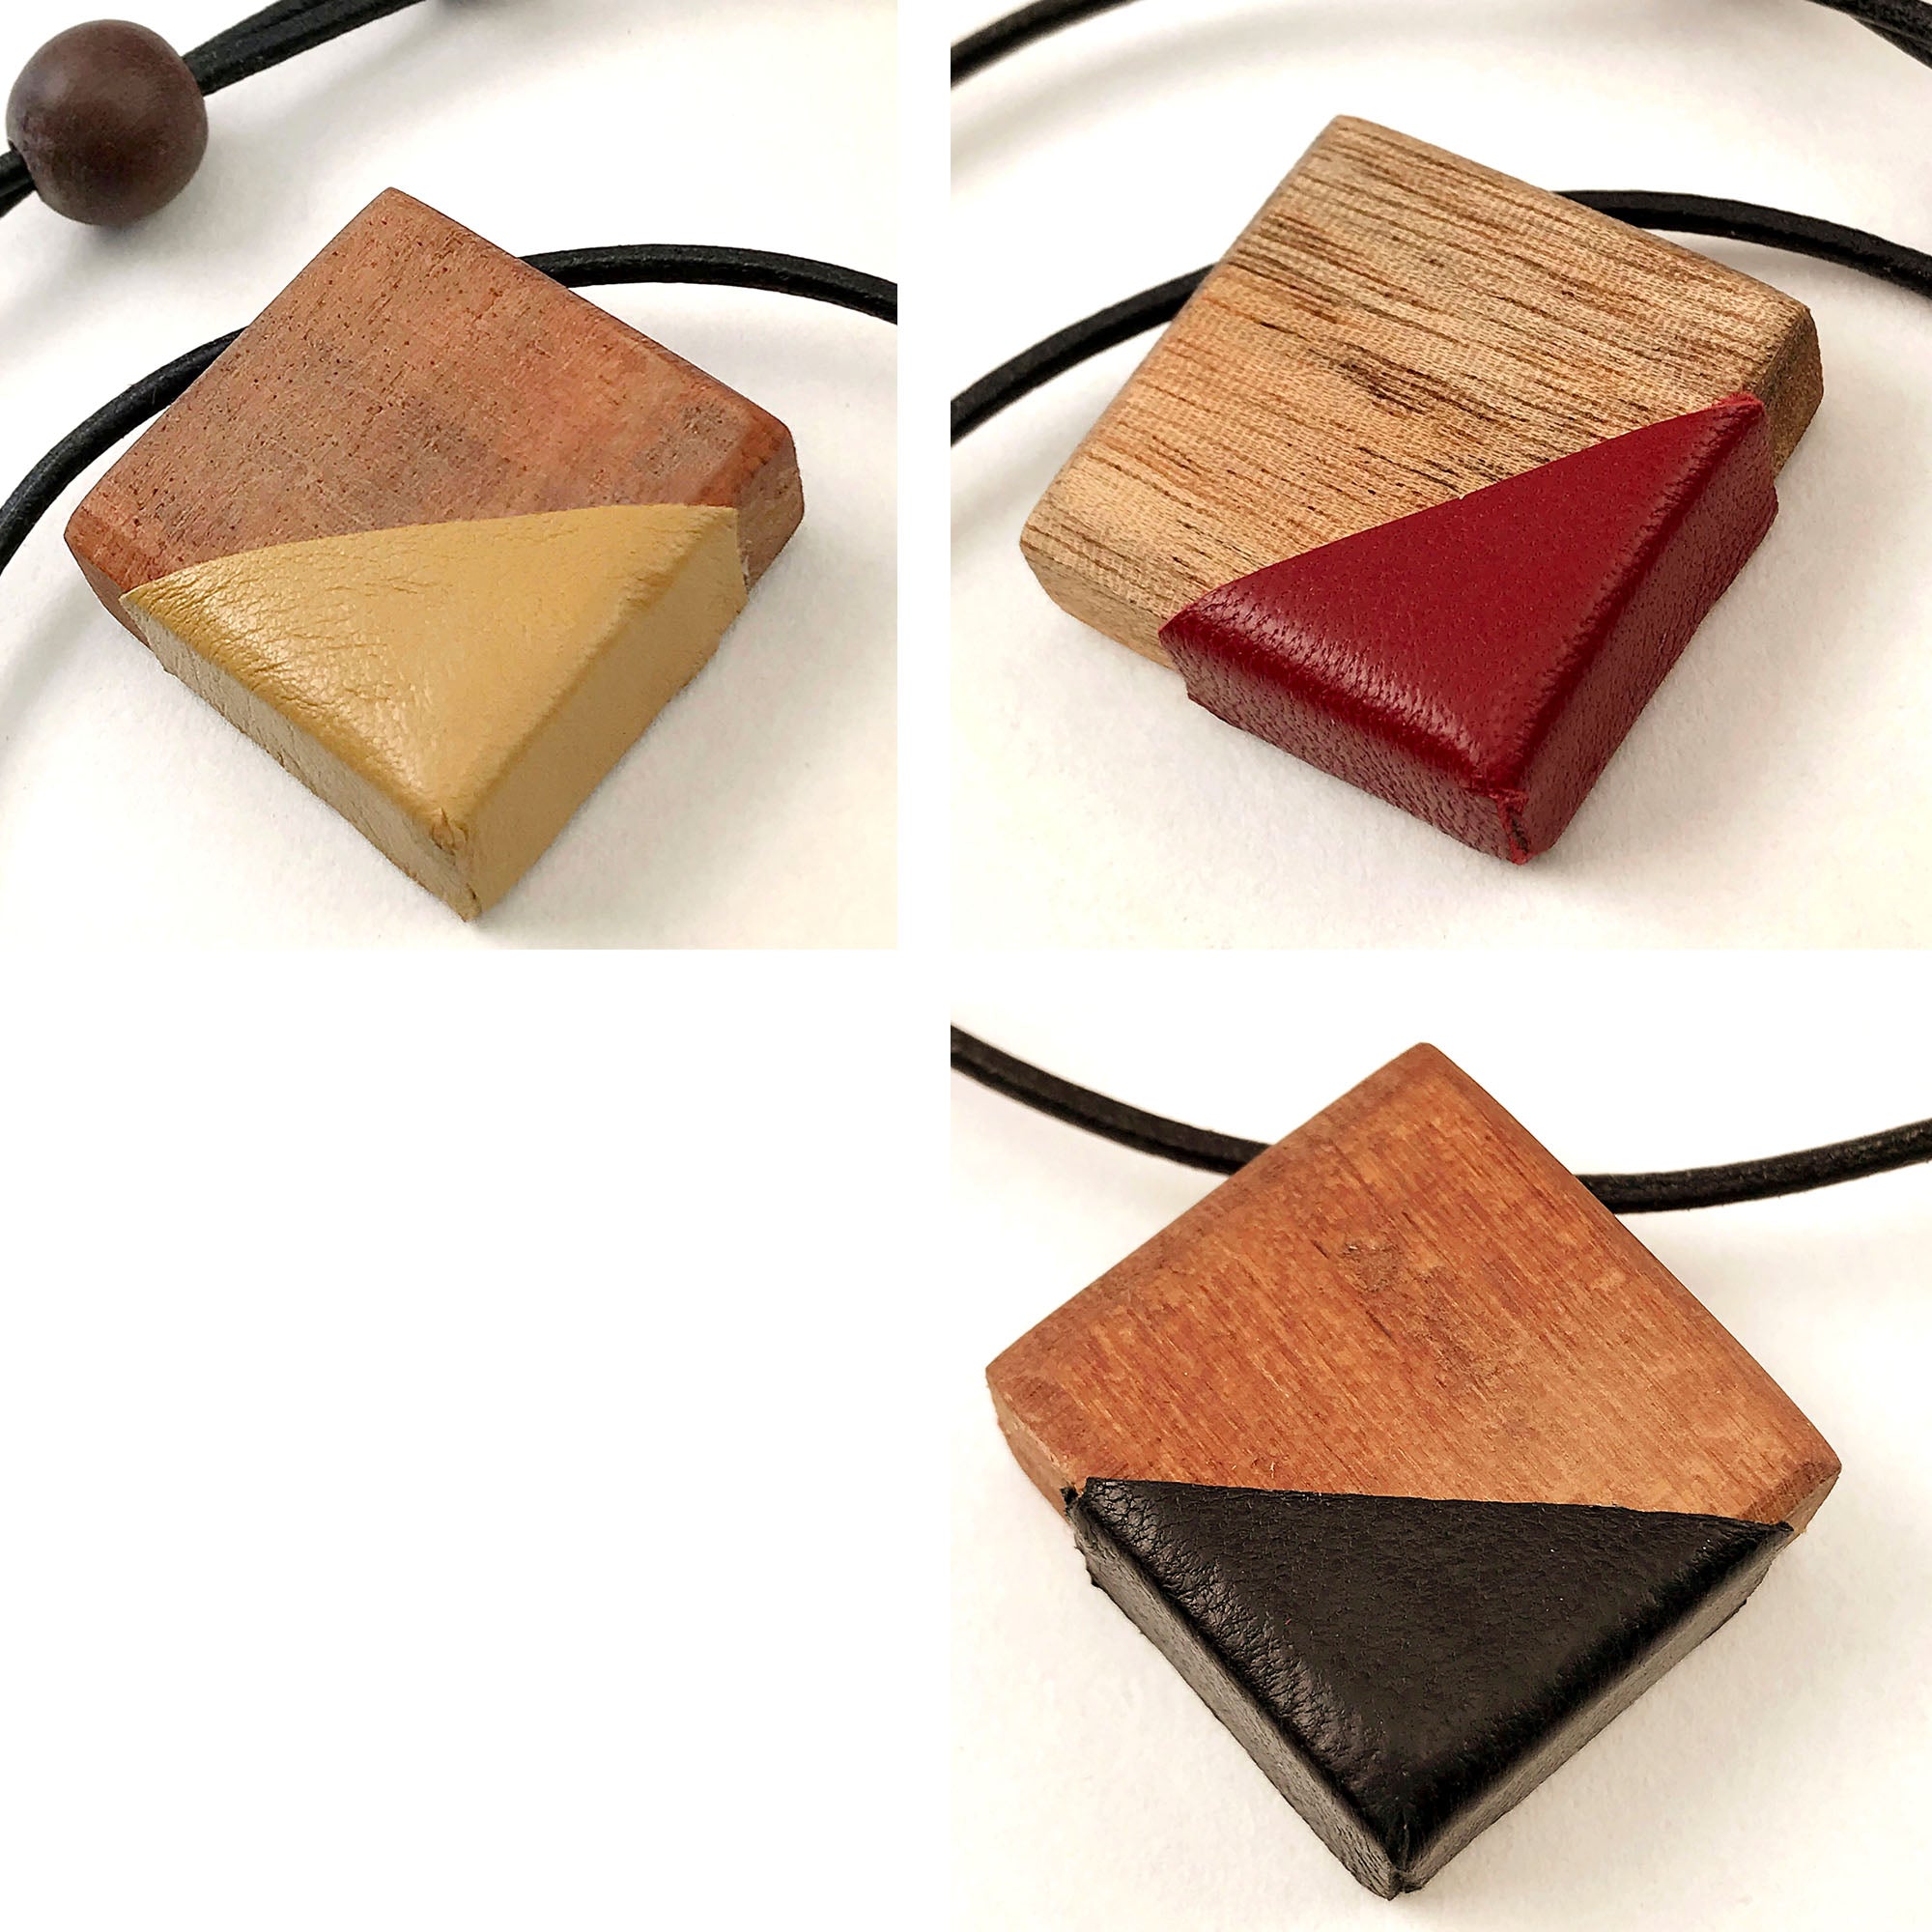 Minimalist wood and leather necklace, Basic adjustable wood pendant with mustard, black or garnet leather, Ecological urban minimal necklace